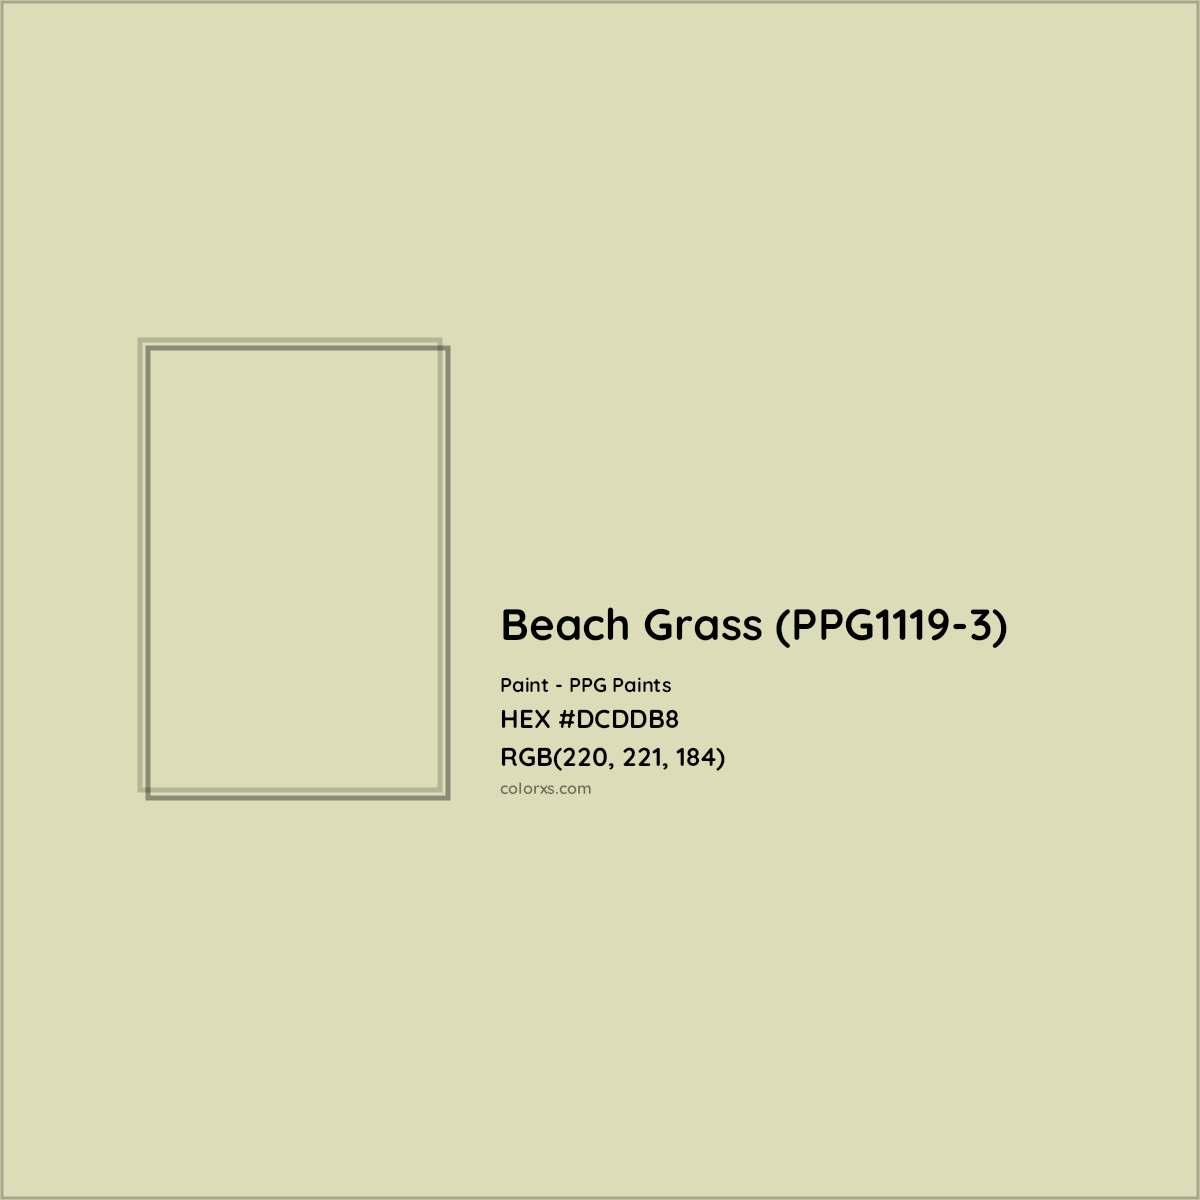 HEX #DCDDB8 Beach Grass (PPG1119-3) Paint PPG Paints - Color Code